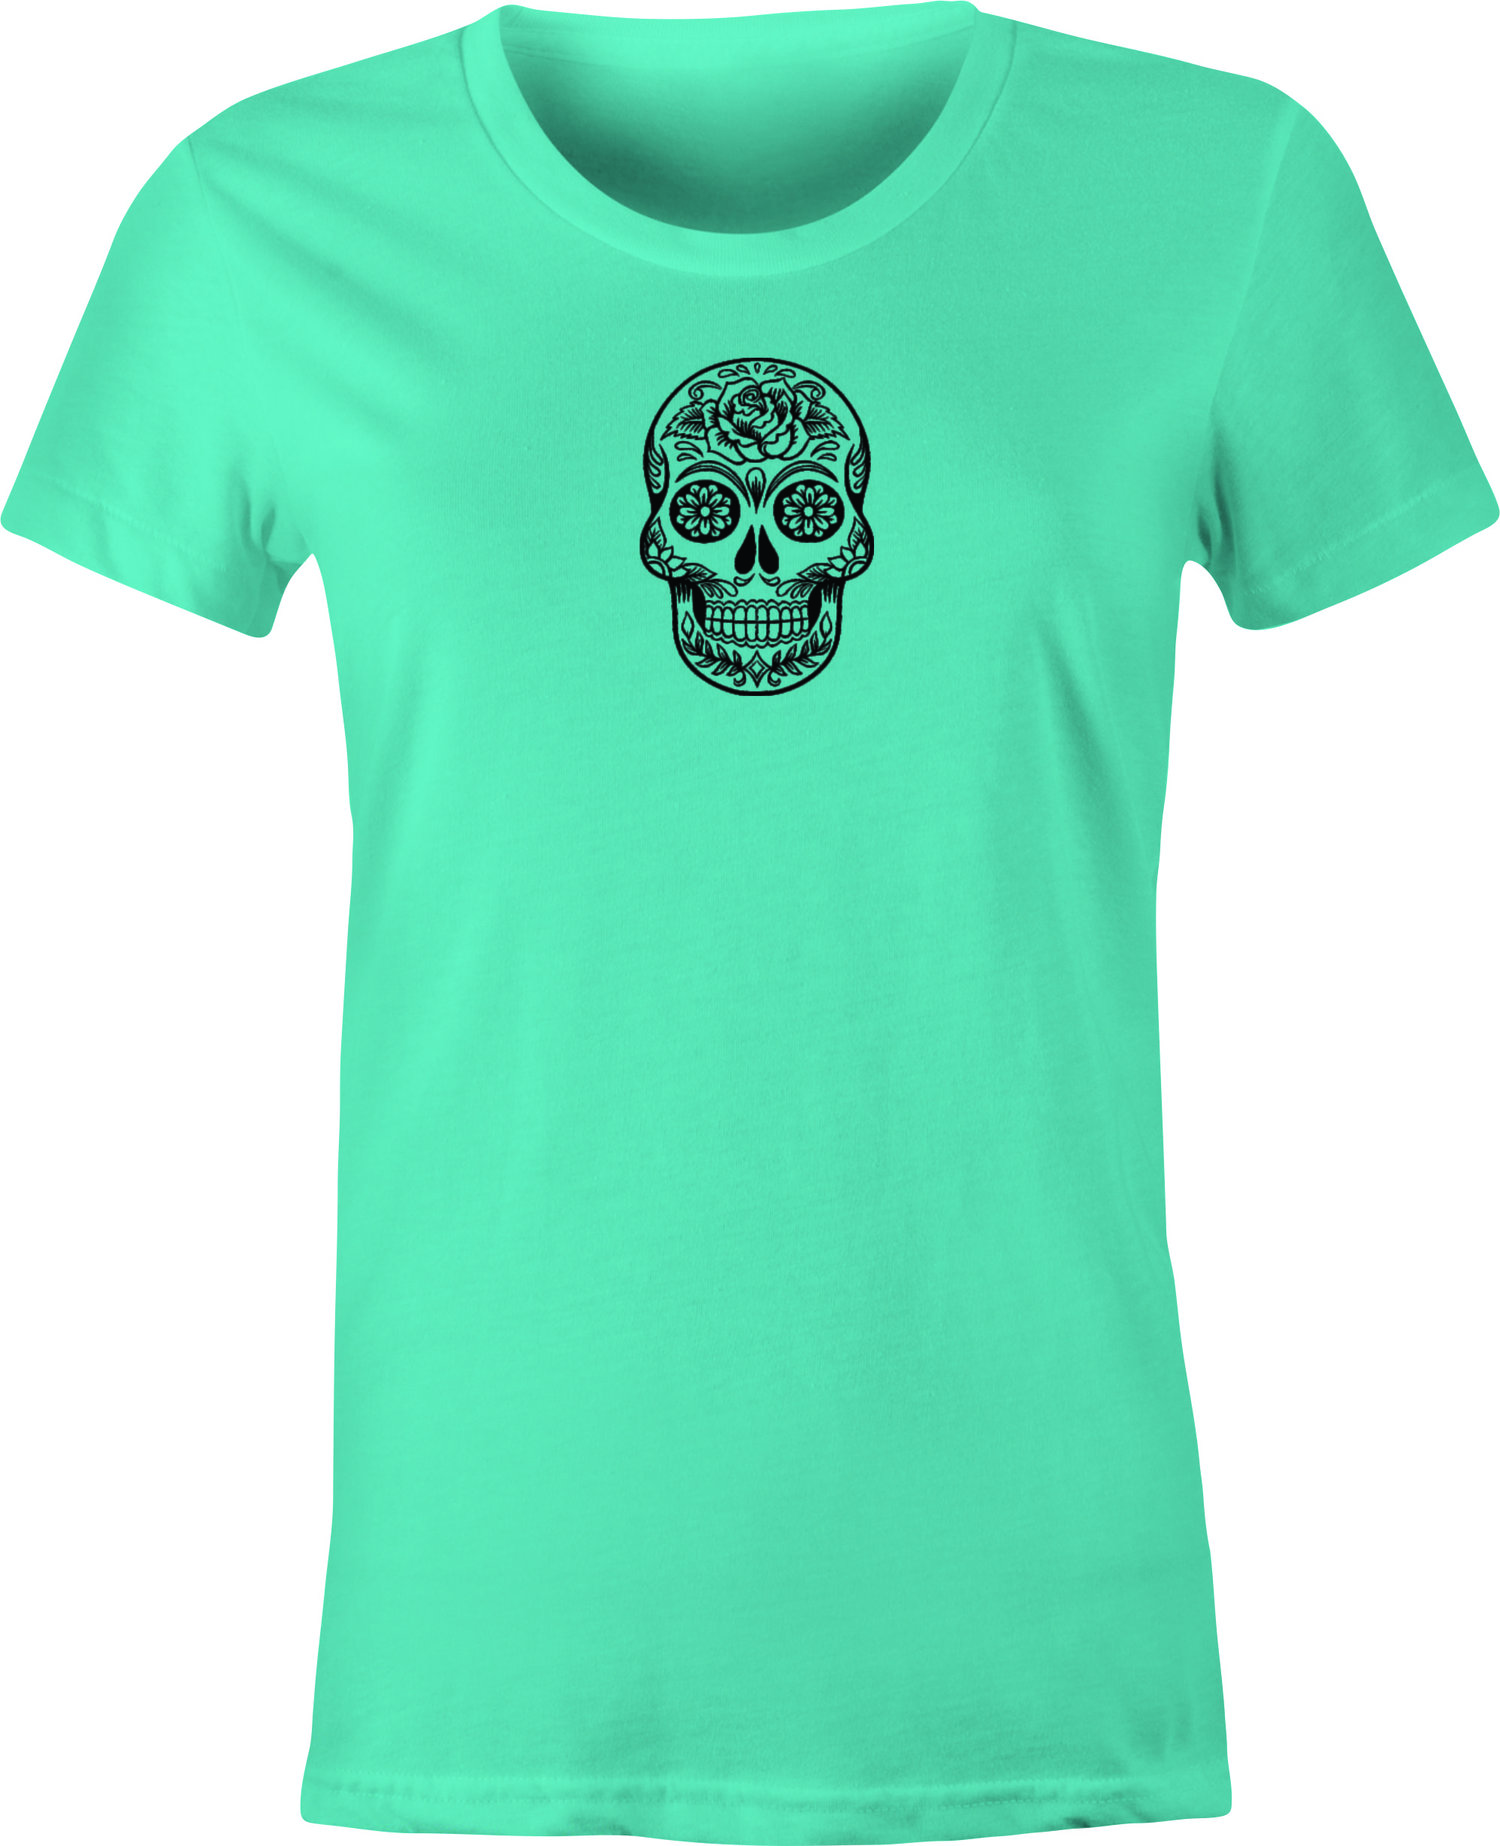 Sugar Skull #1 Mexican Folk Art printed on Women's T shirt